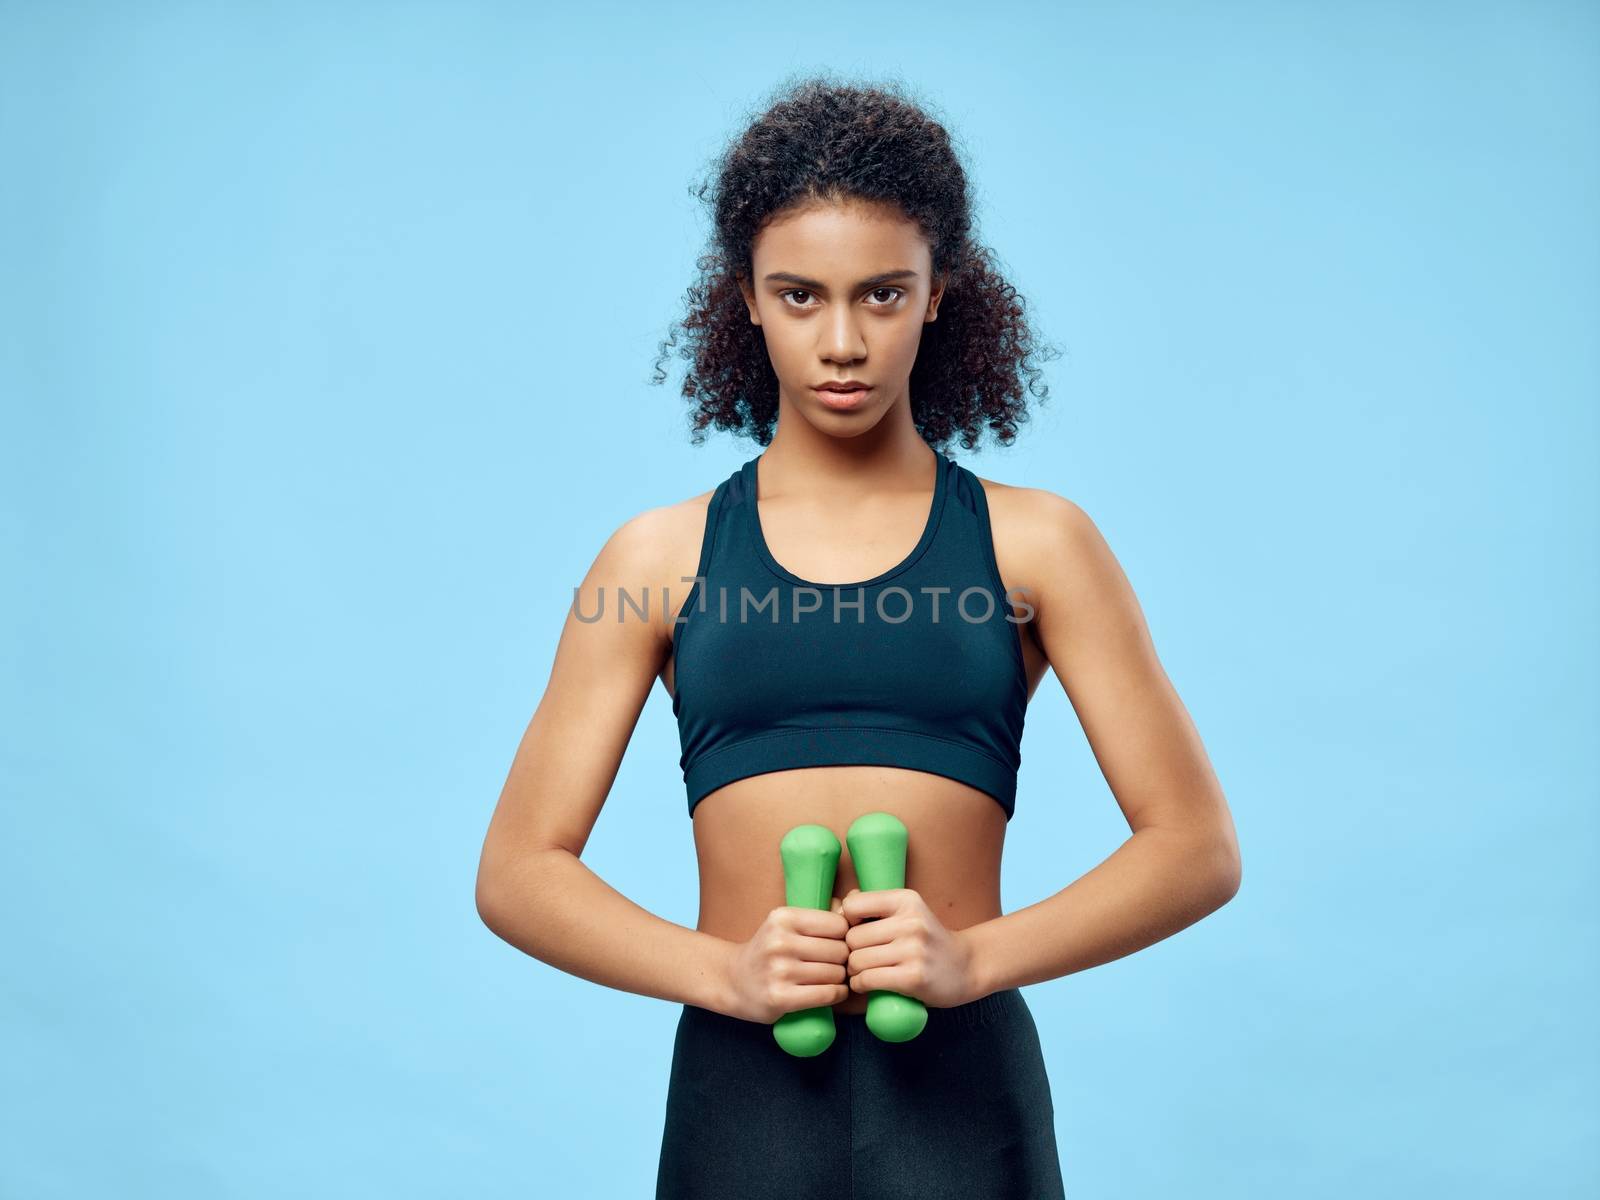 Sportive woman slim figure dumbbells exercise motivation gymnasium